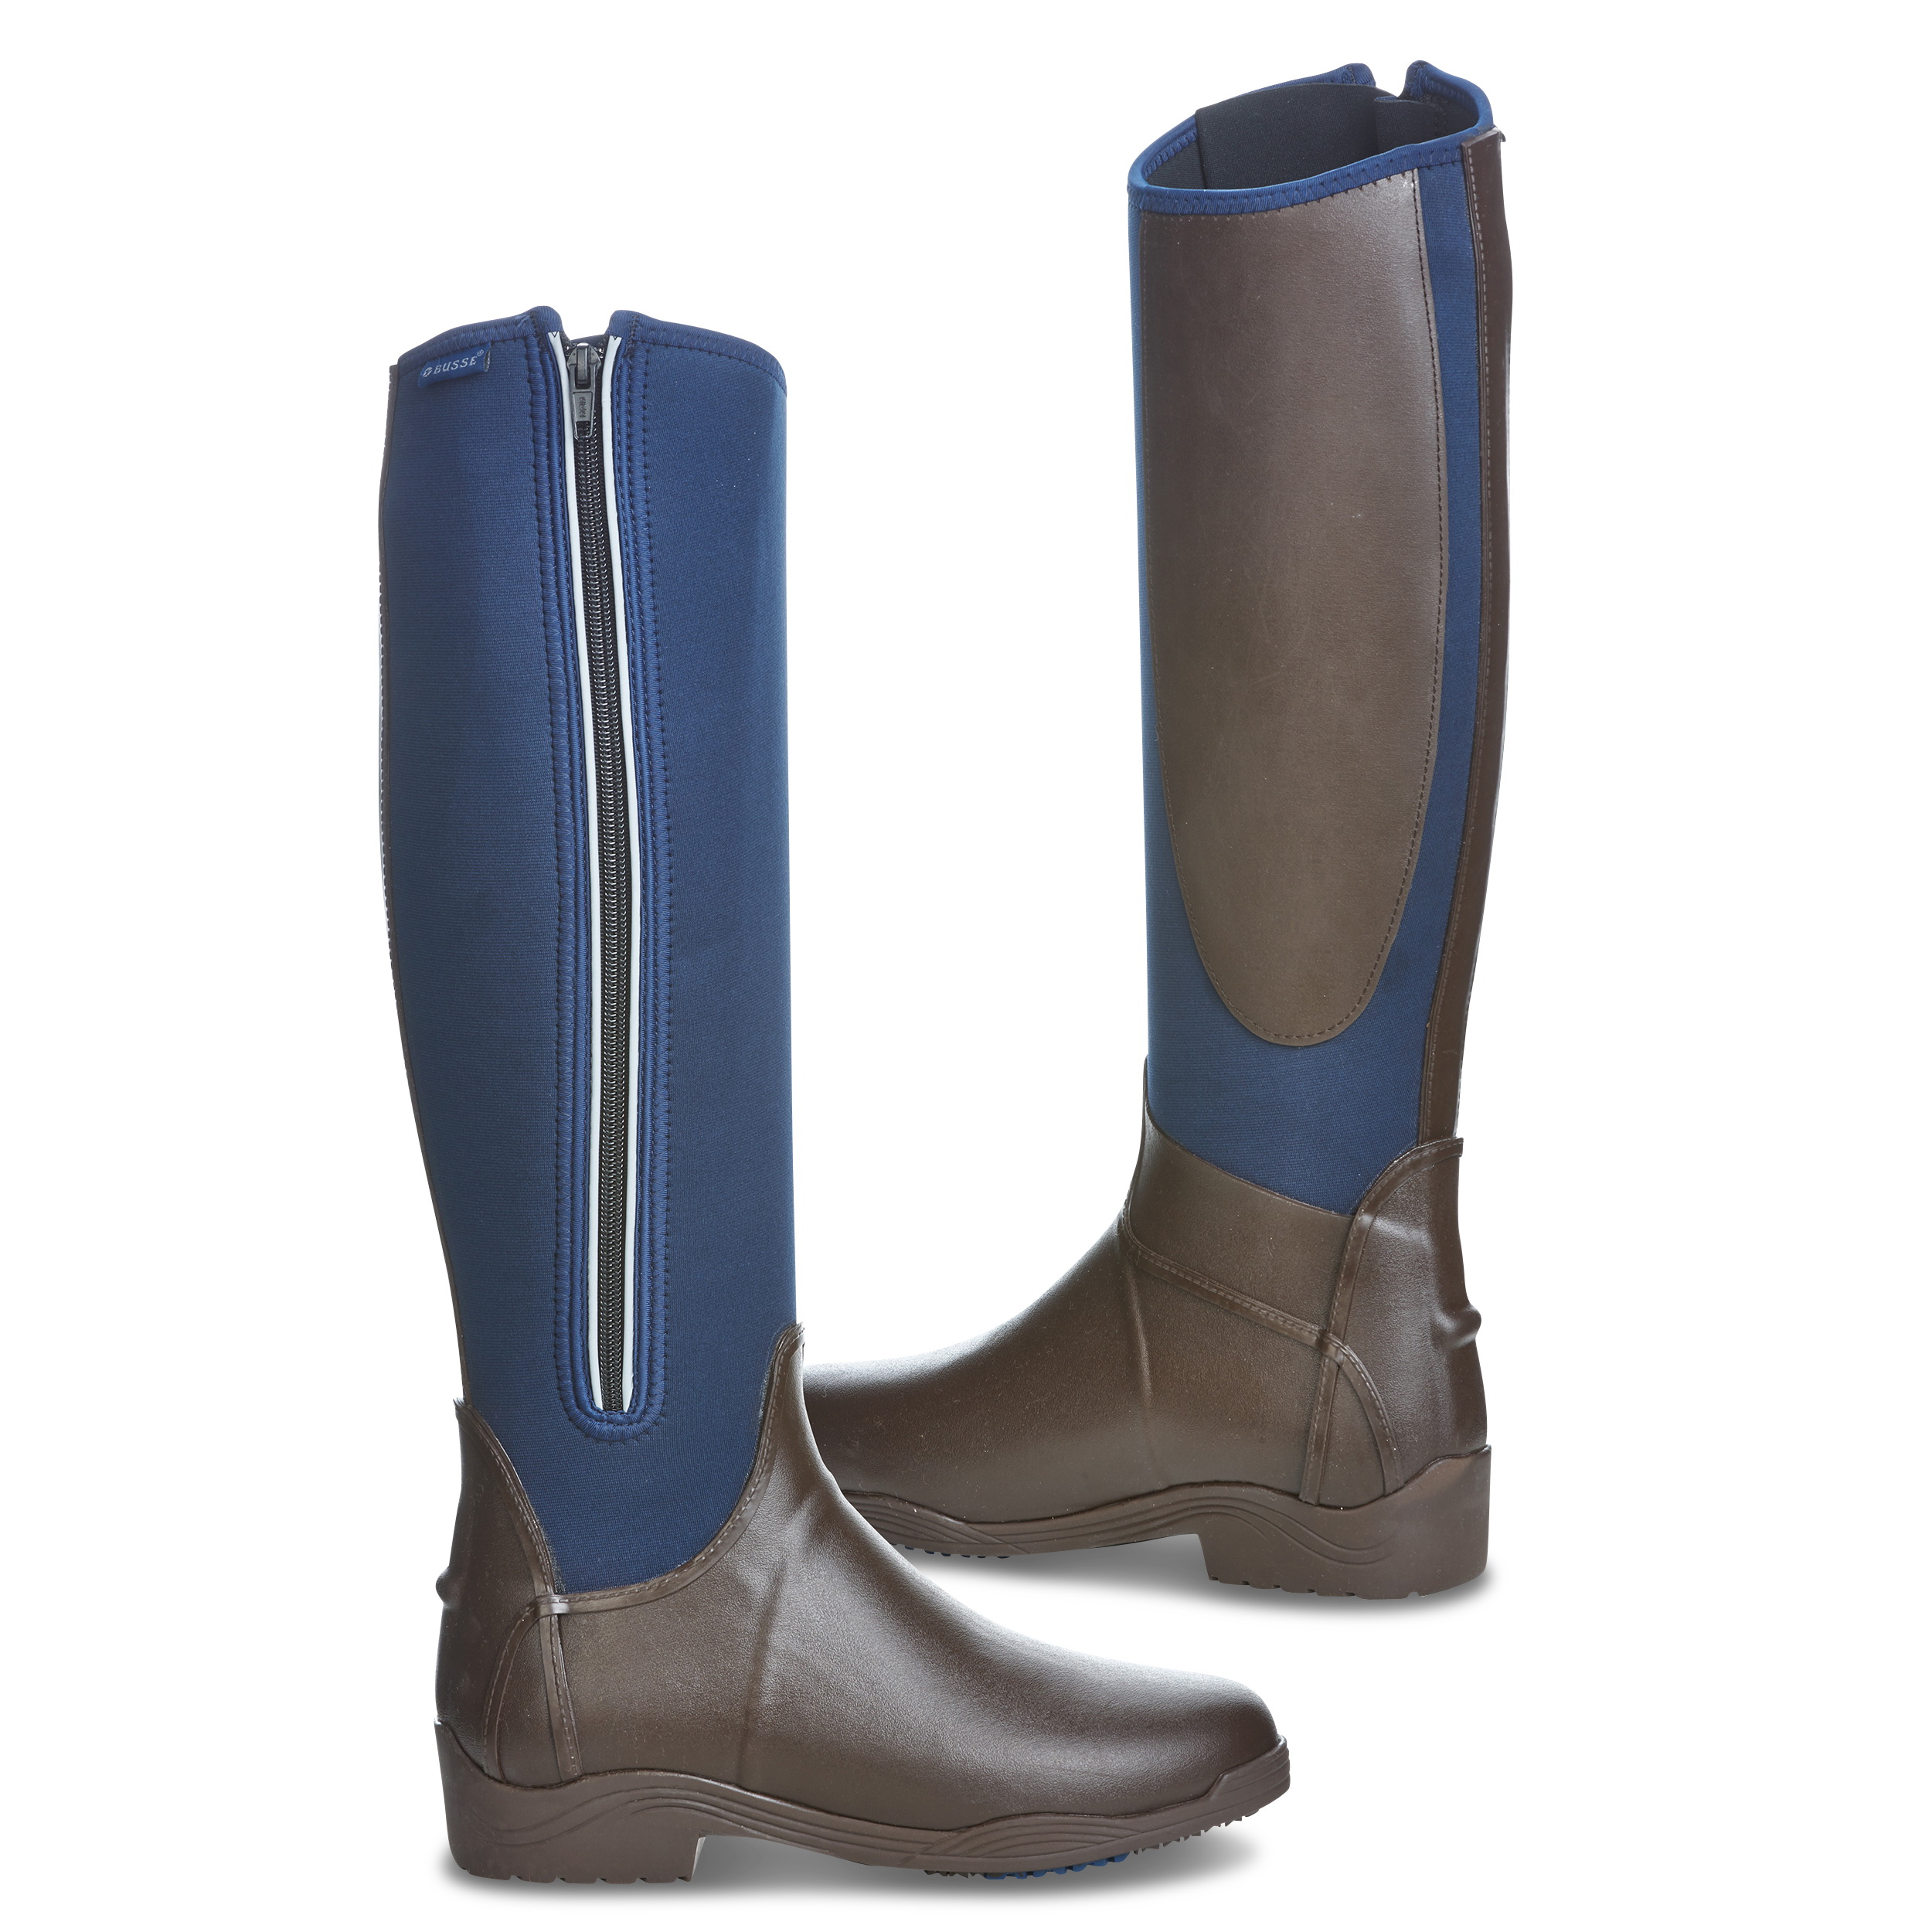 BUSSE Reit-Mud Boots CALGARY, braun/navy